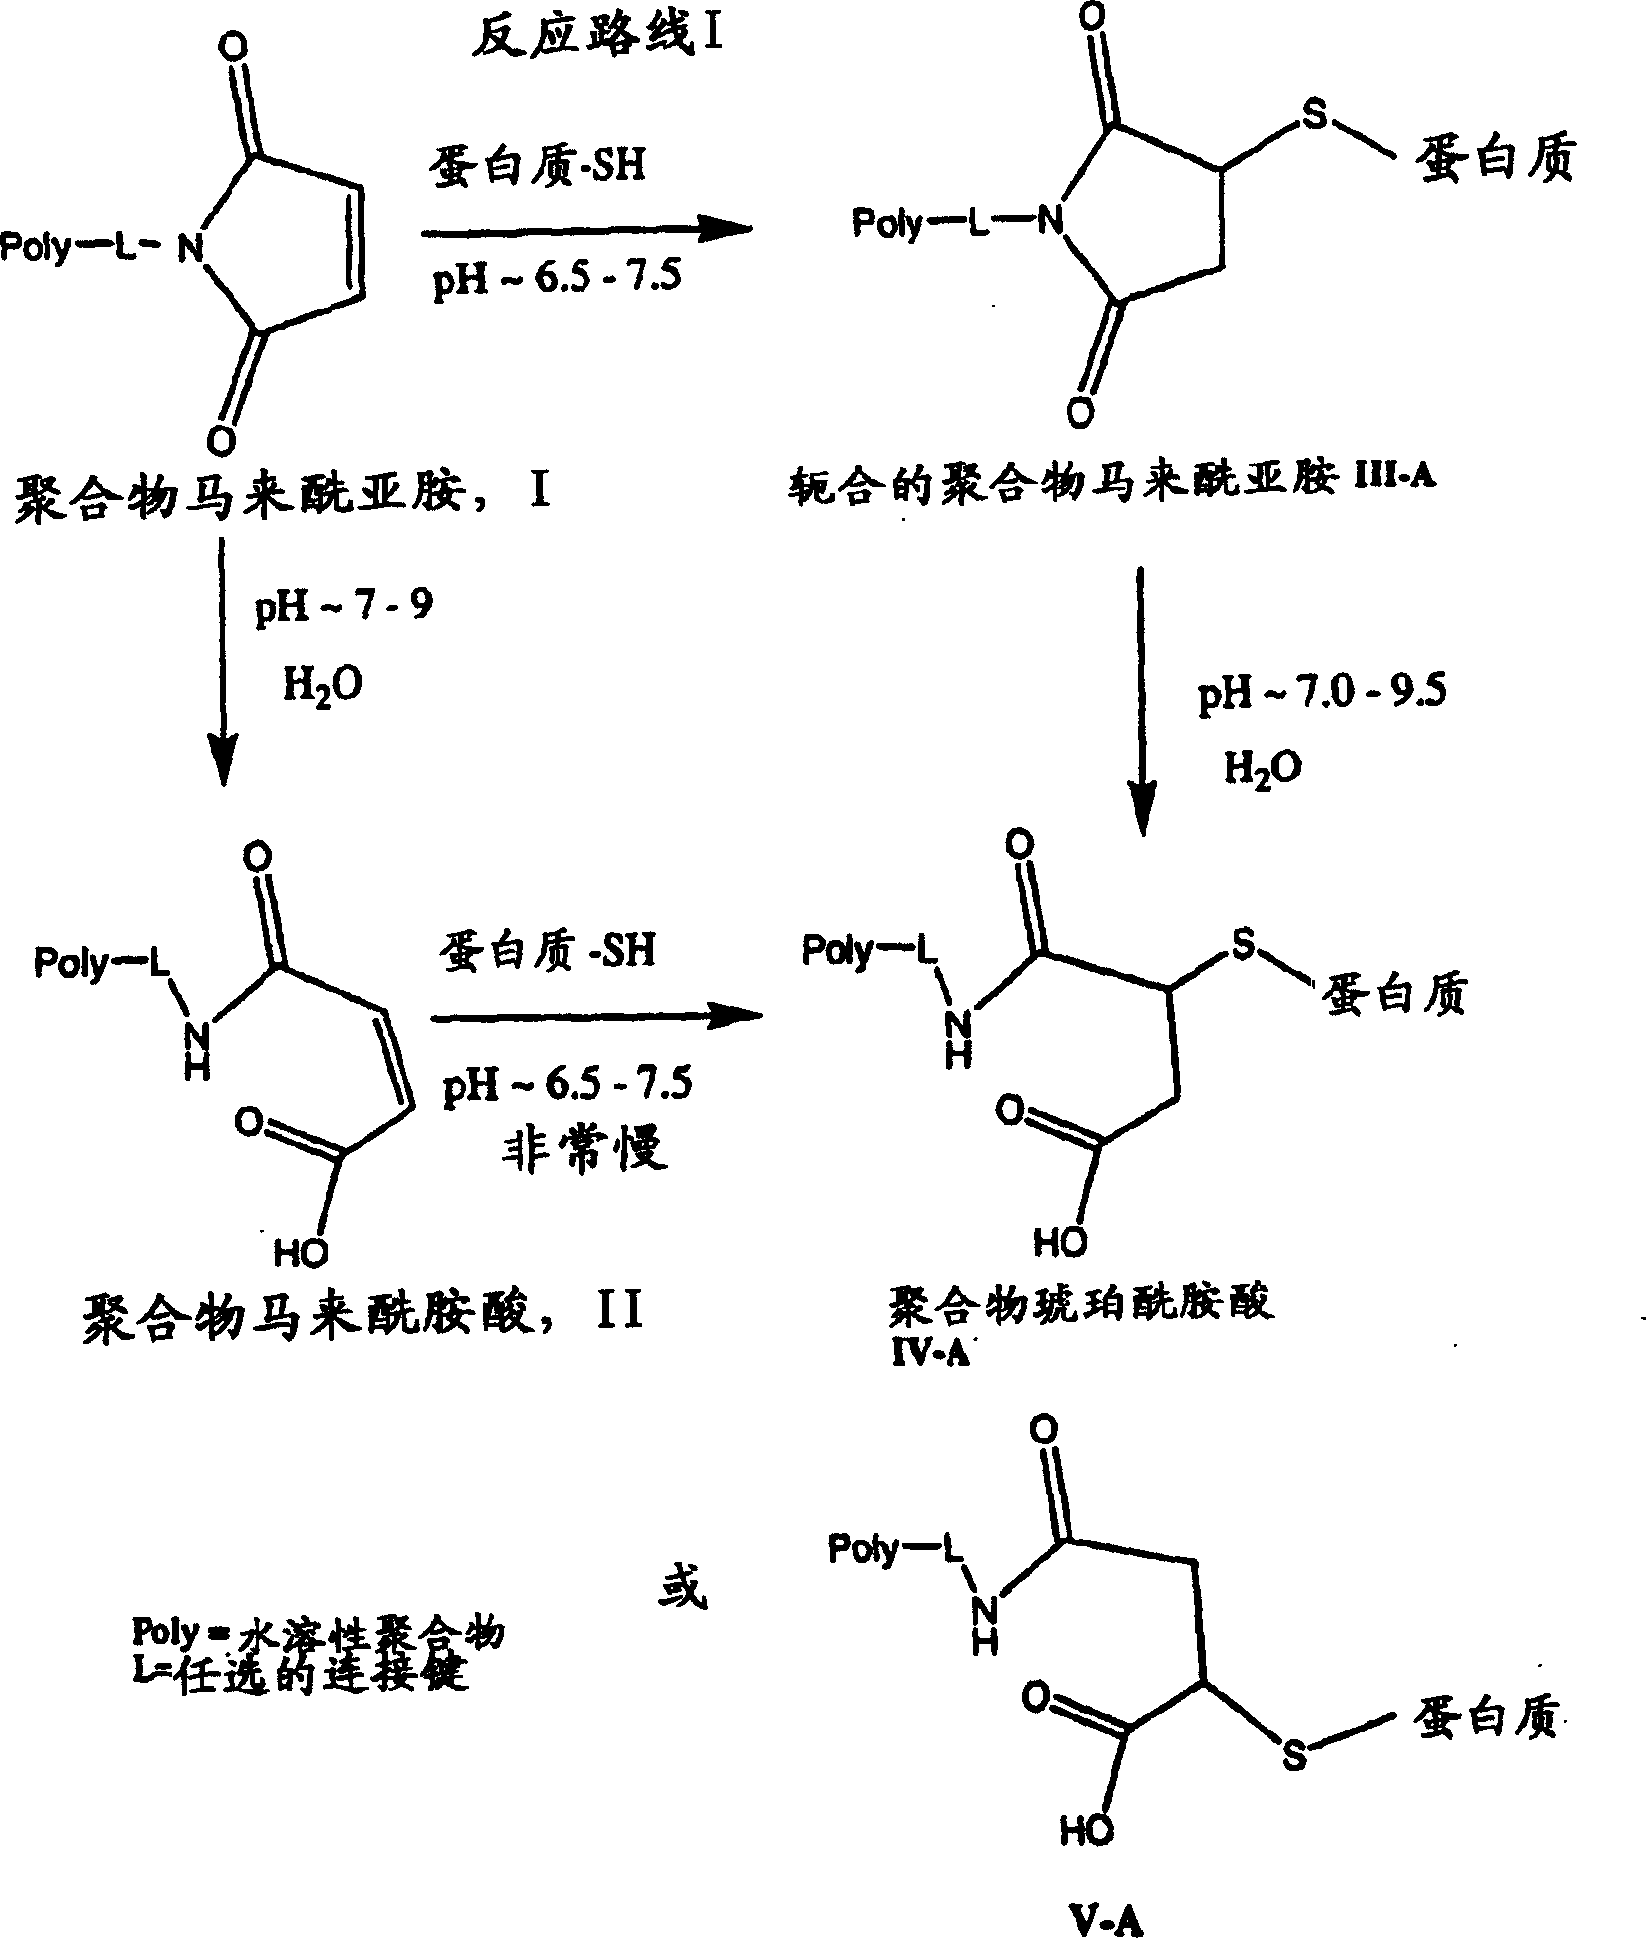 Maleamic acid polymer derivatives and their bioconjugates